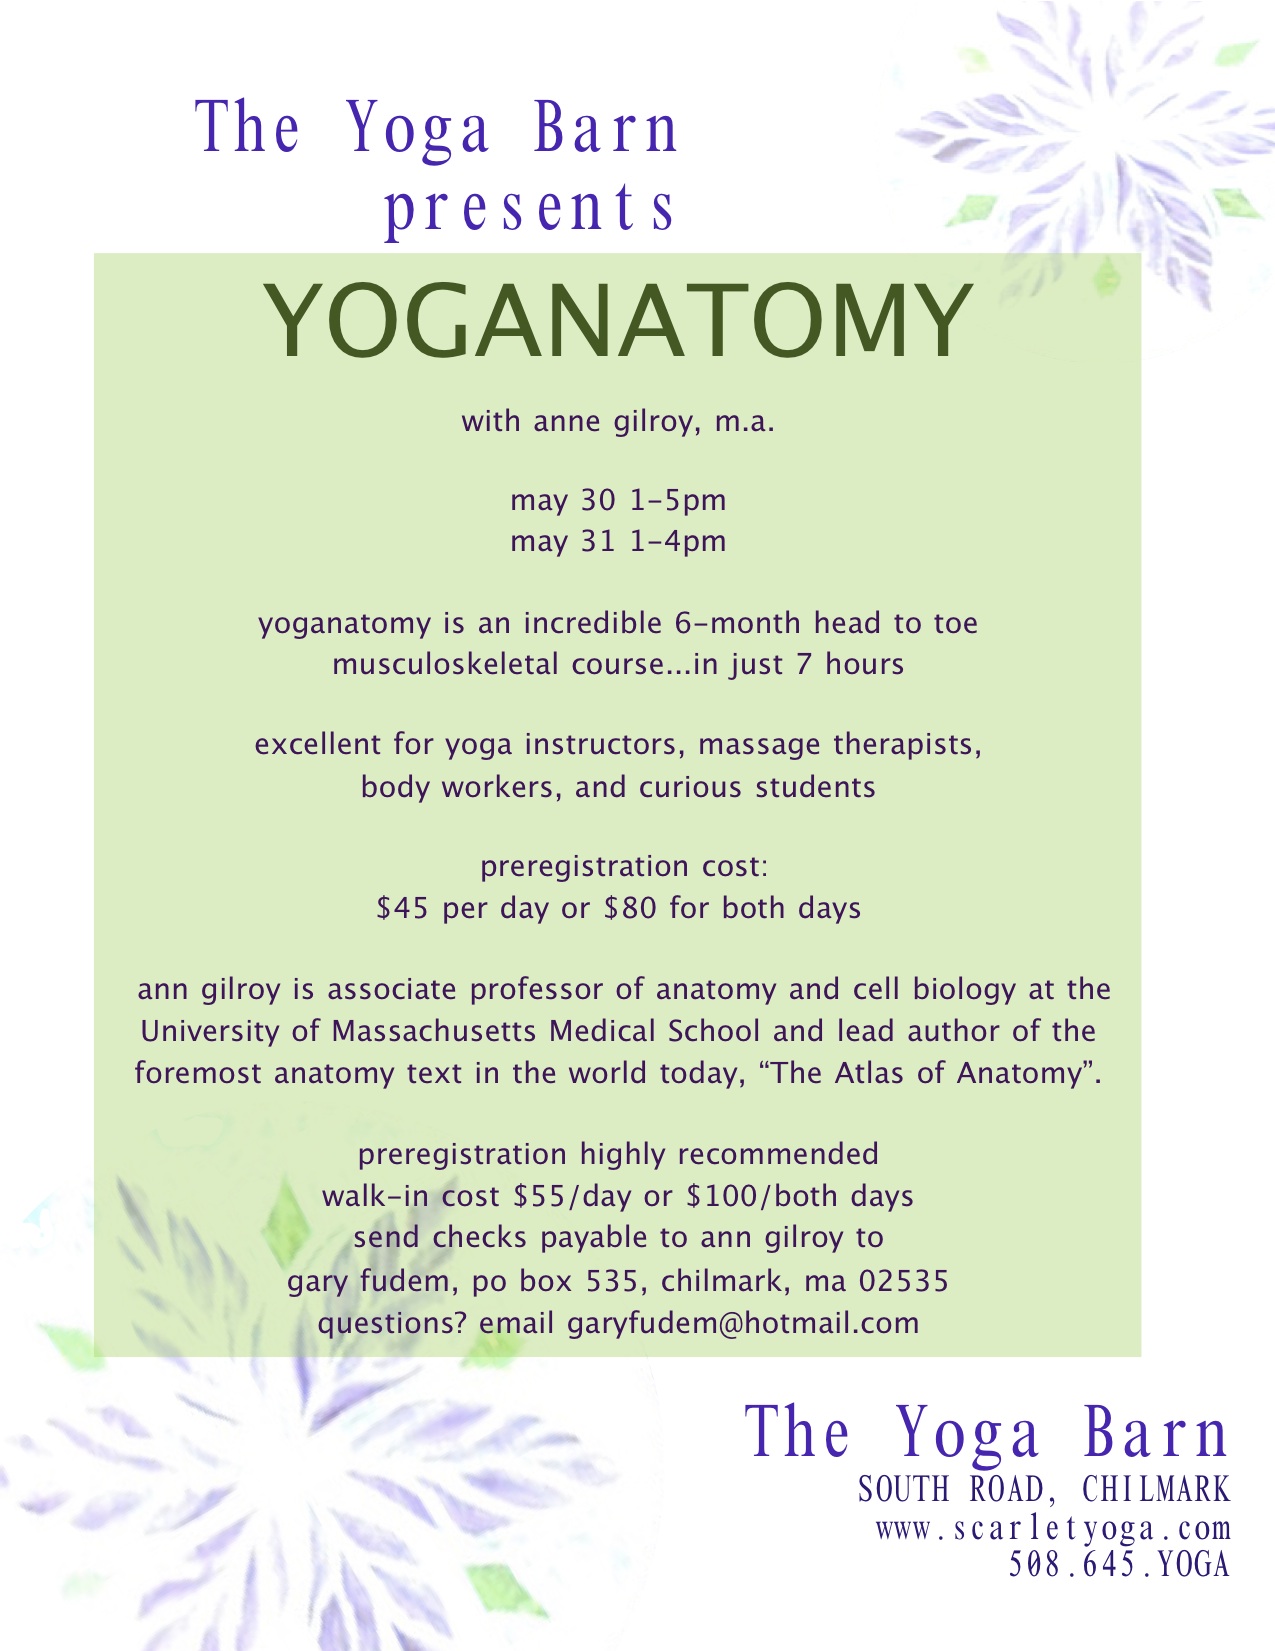 yb-yoganatomy-flyer